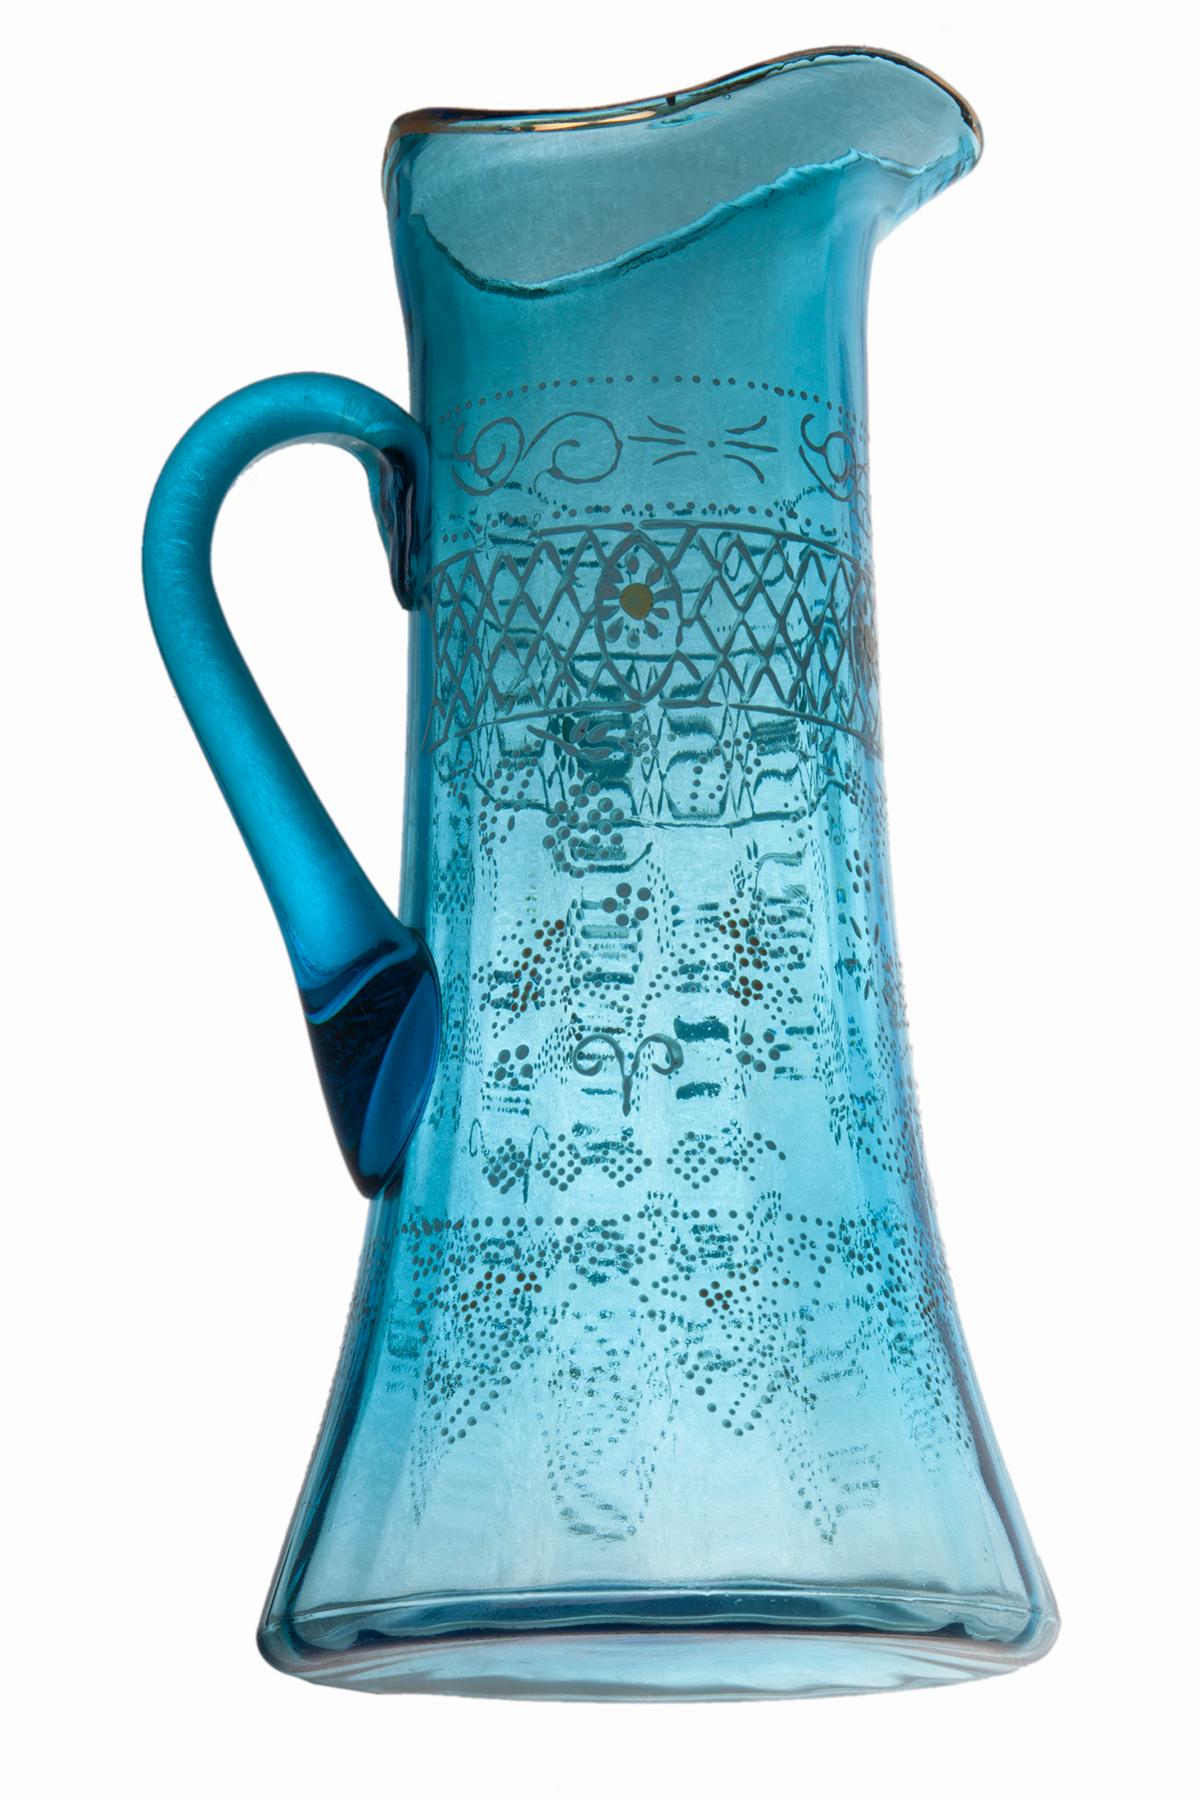 antique glass pitcher